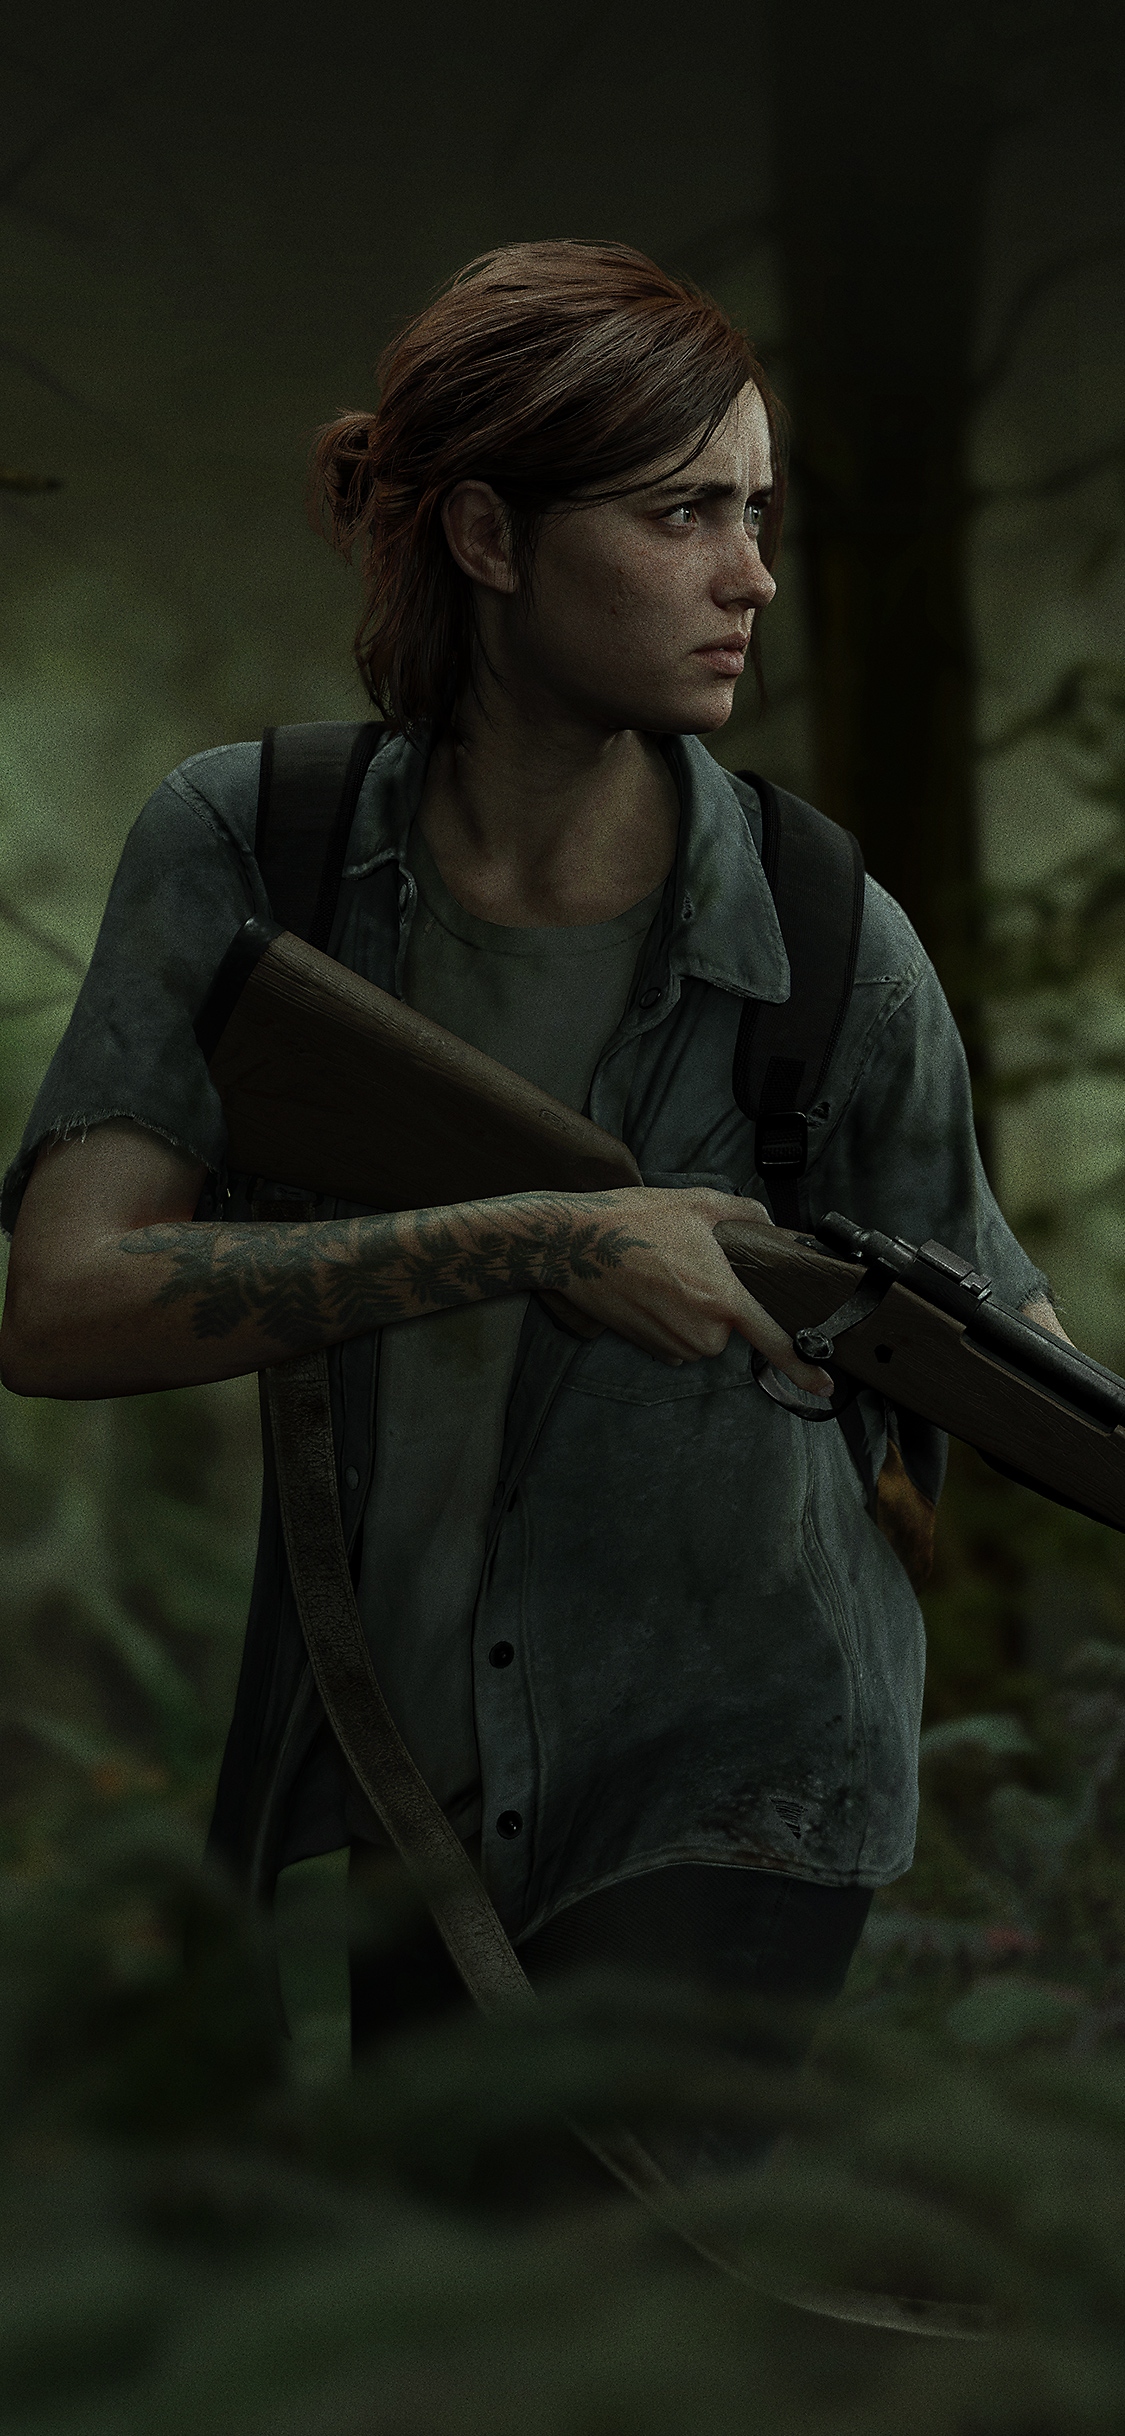 The Last of Us Part II dan izbijanja 2018- iPhone X